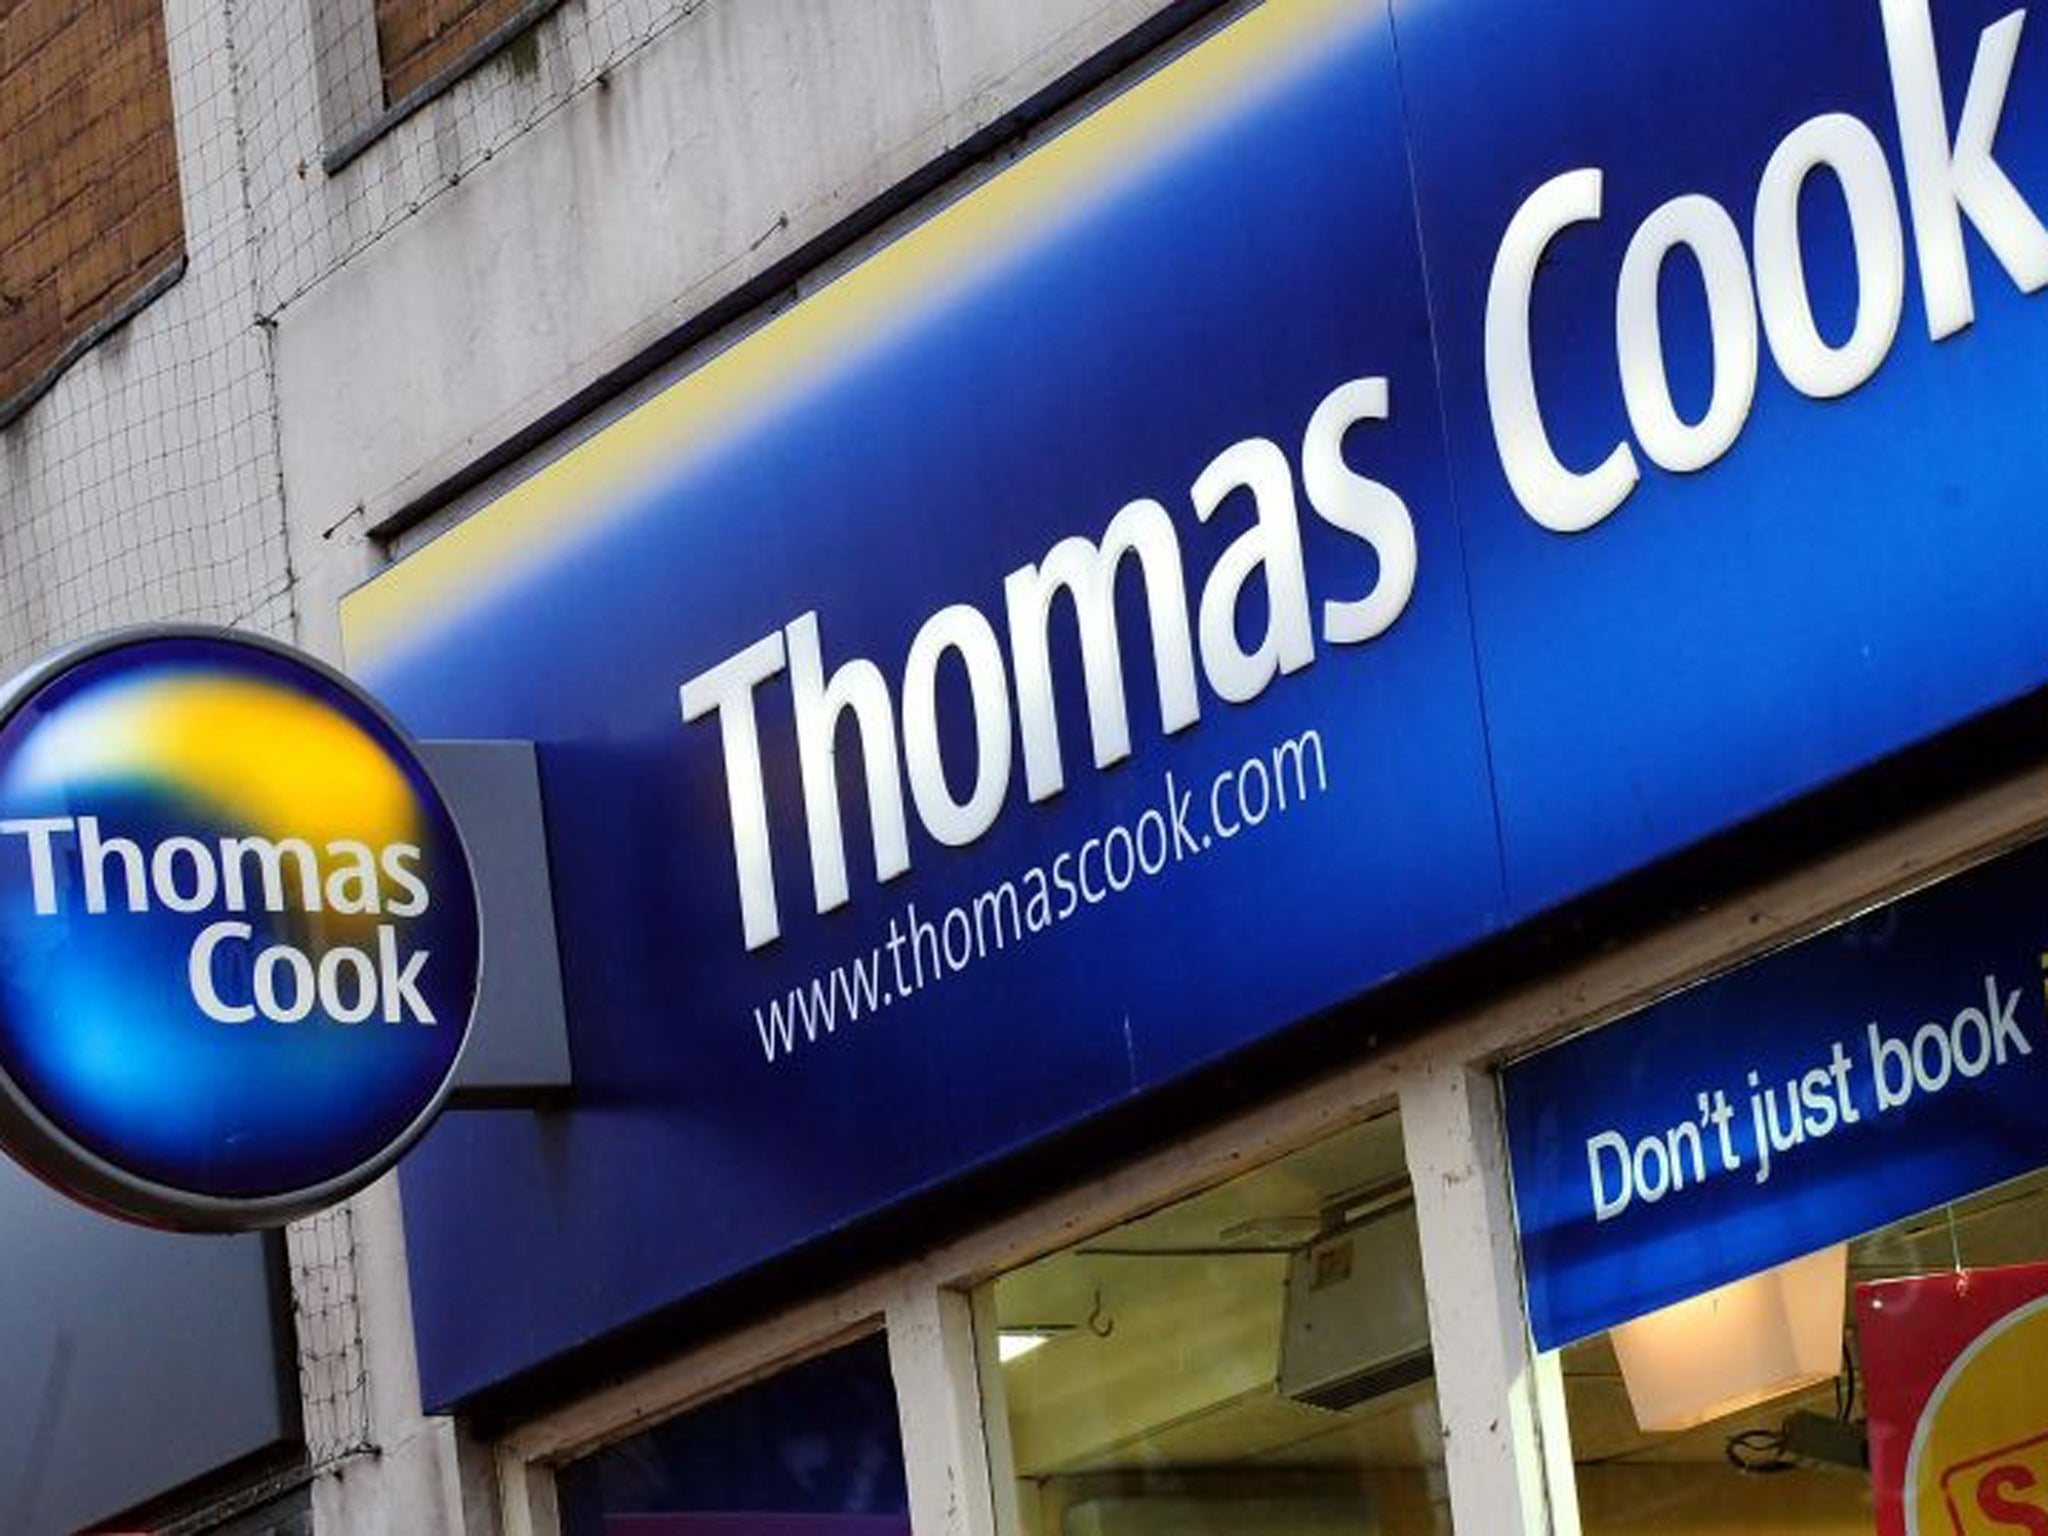 Thomas Cook announced plans to axe 2,500 UK jobs